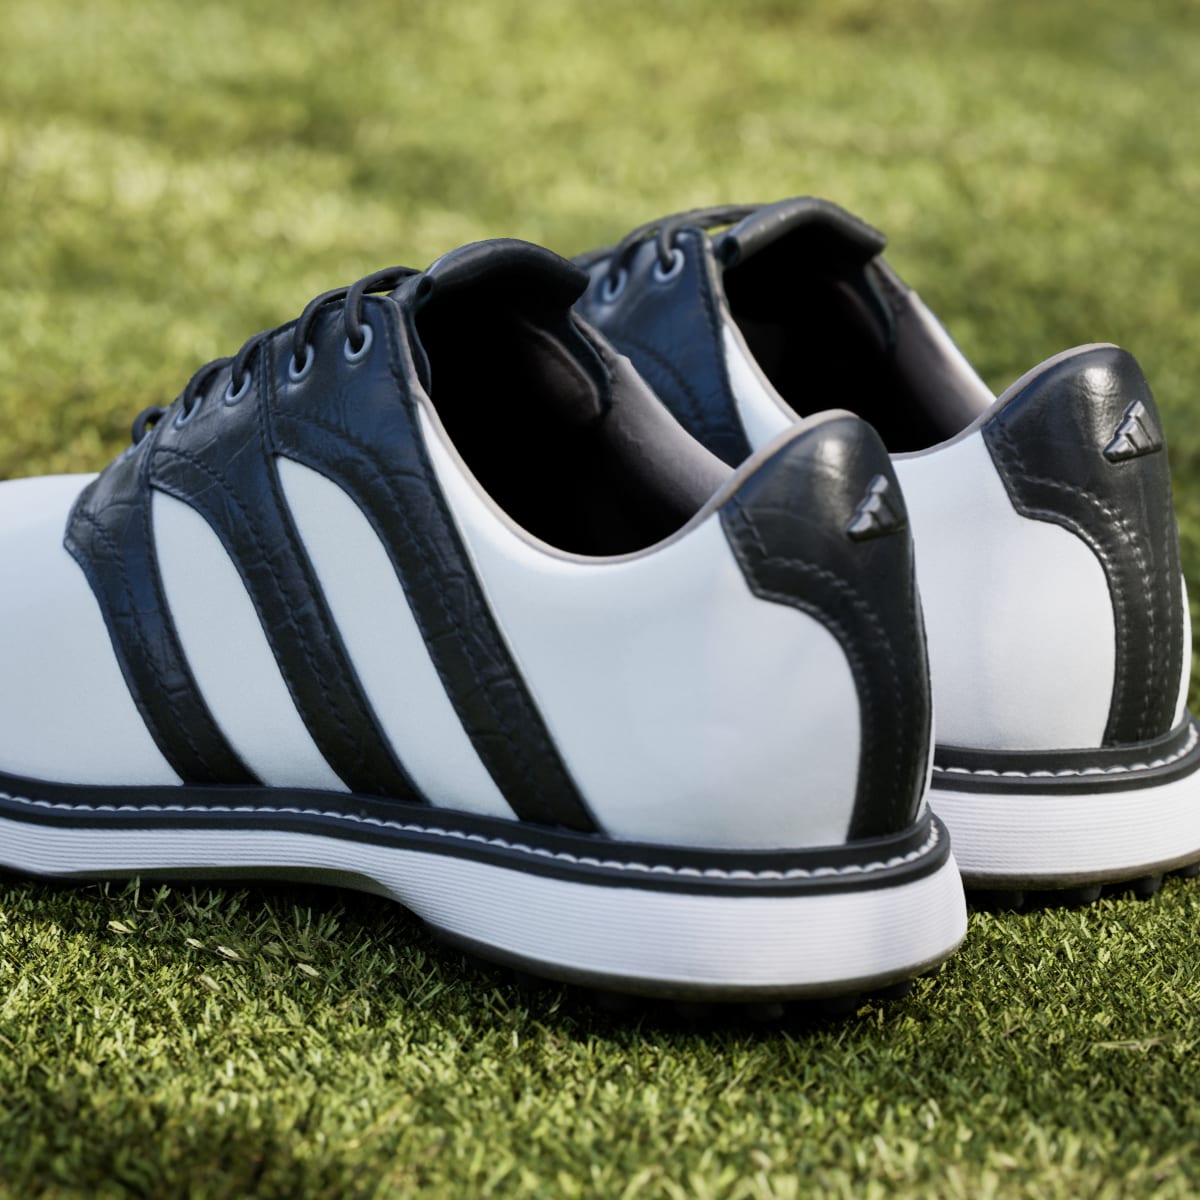 Adidas MC Z-Traxion Spikeless Golf Shoes. 9